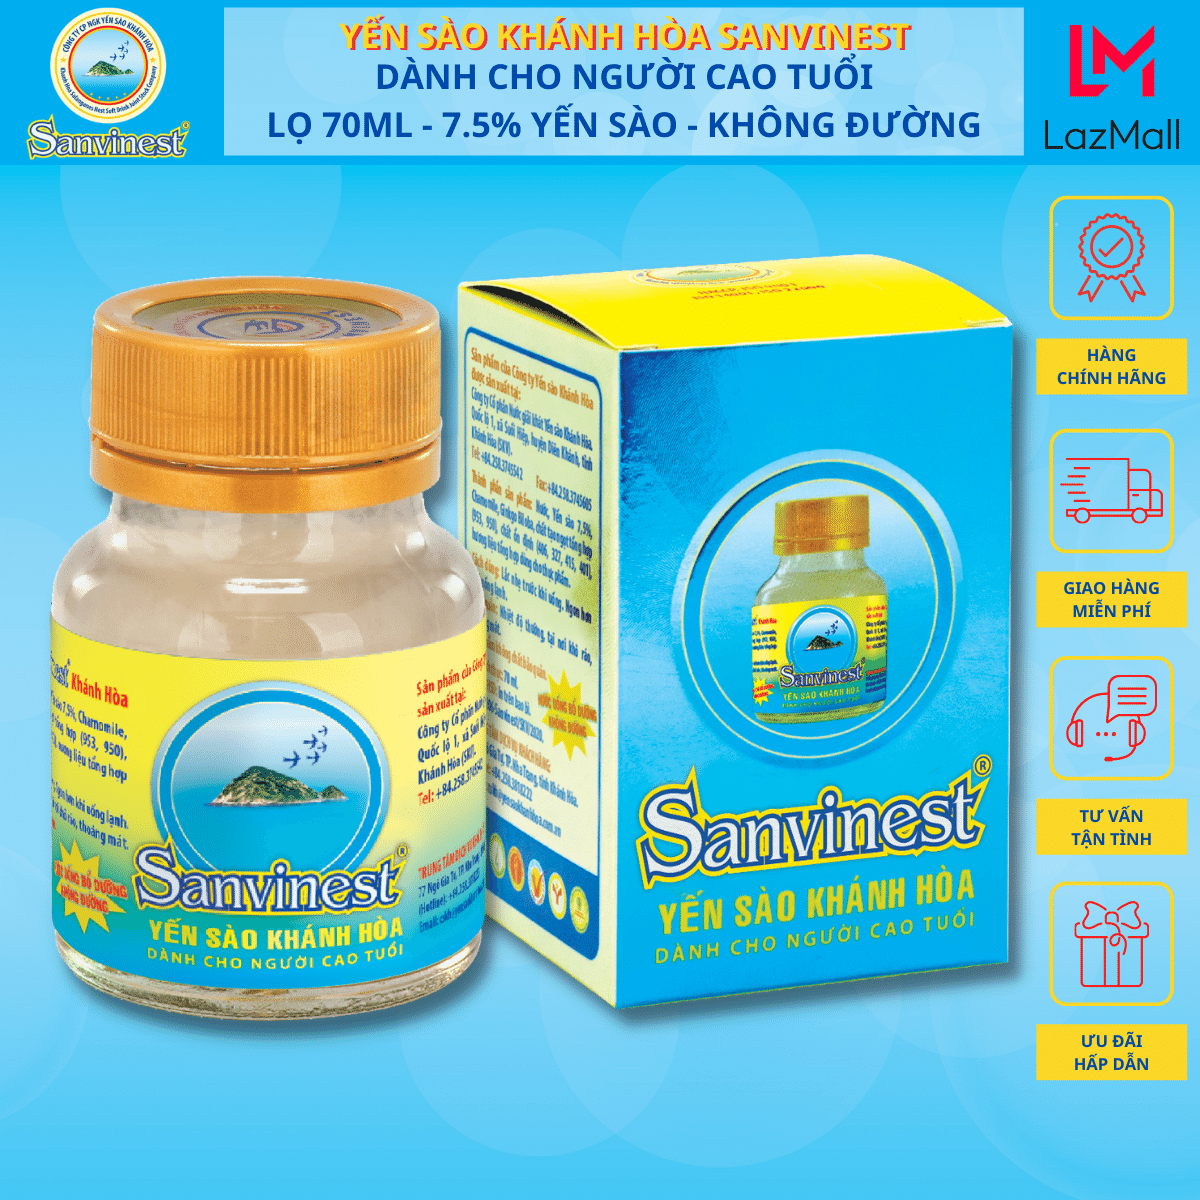 ird Nest sanvinest Khánh Hòa dietrict sugar for the elderly 70 ml